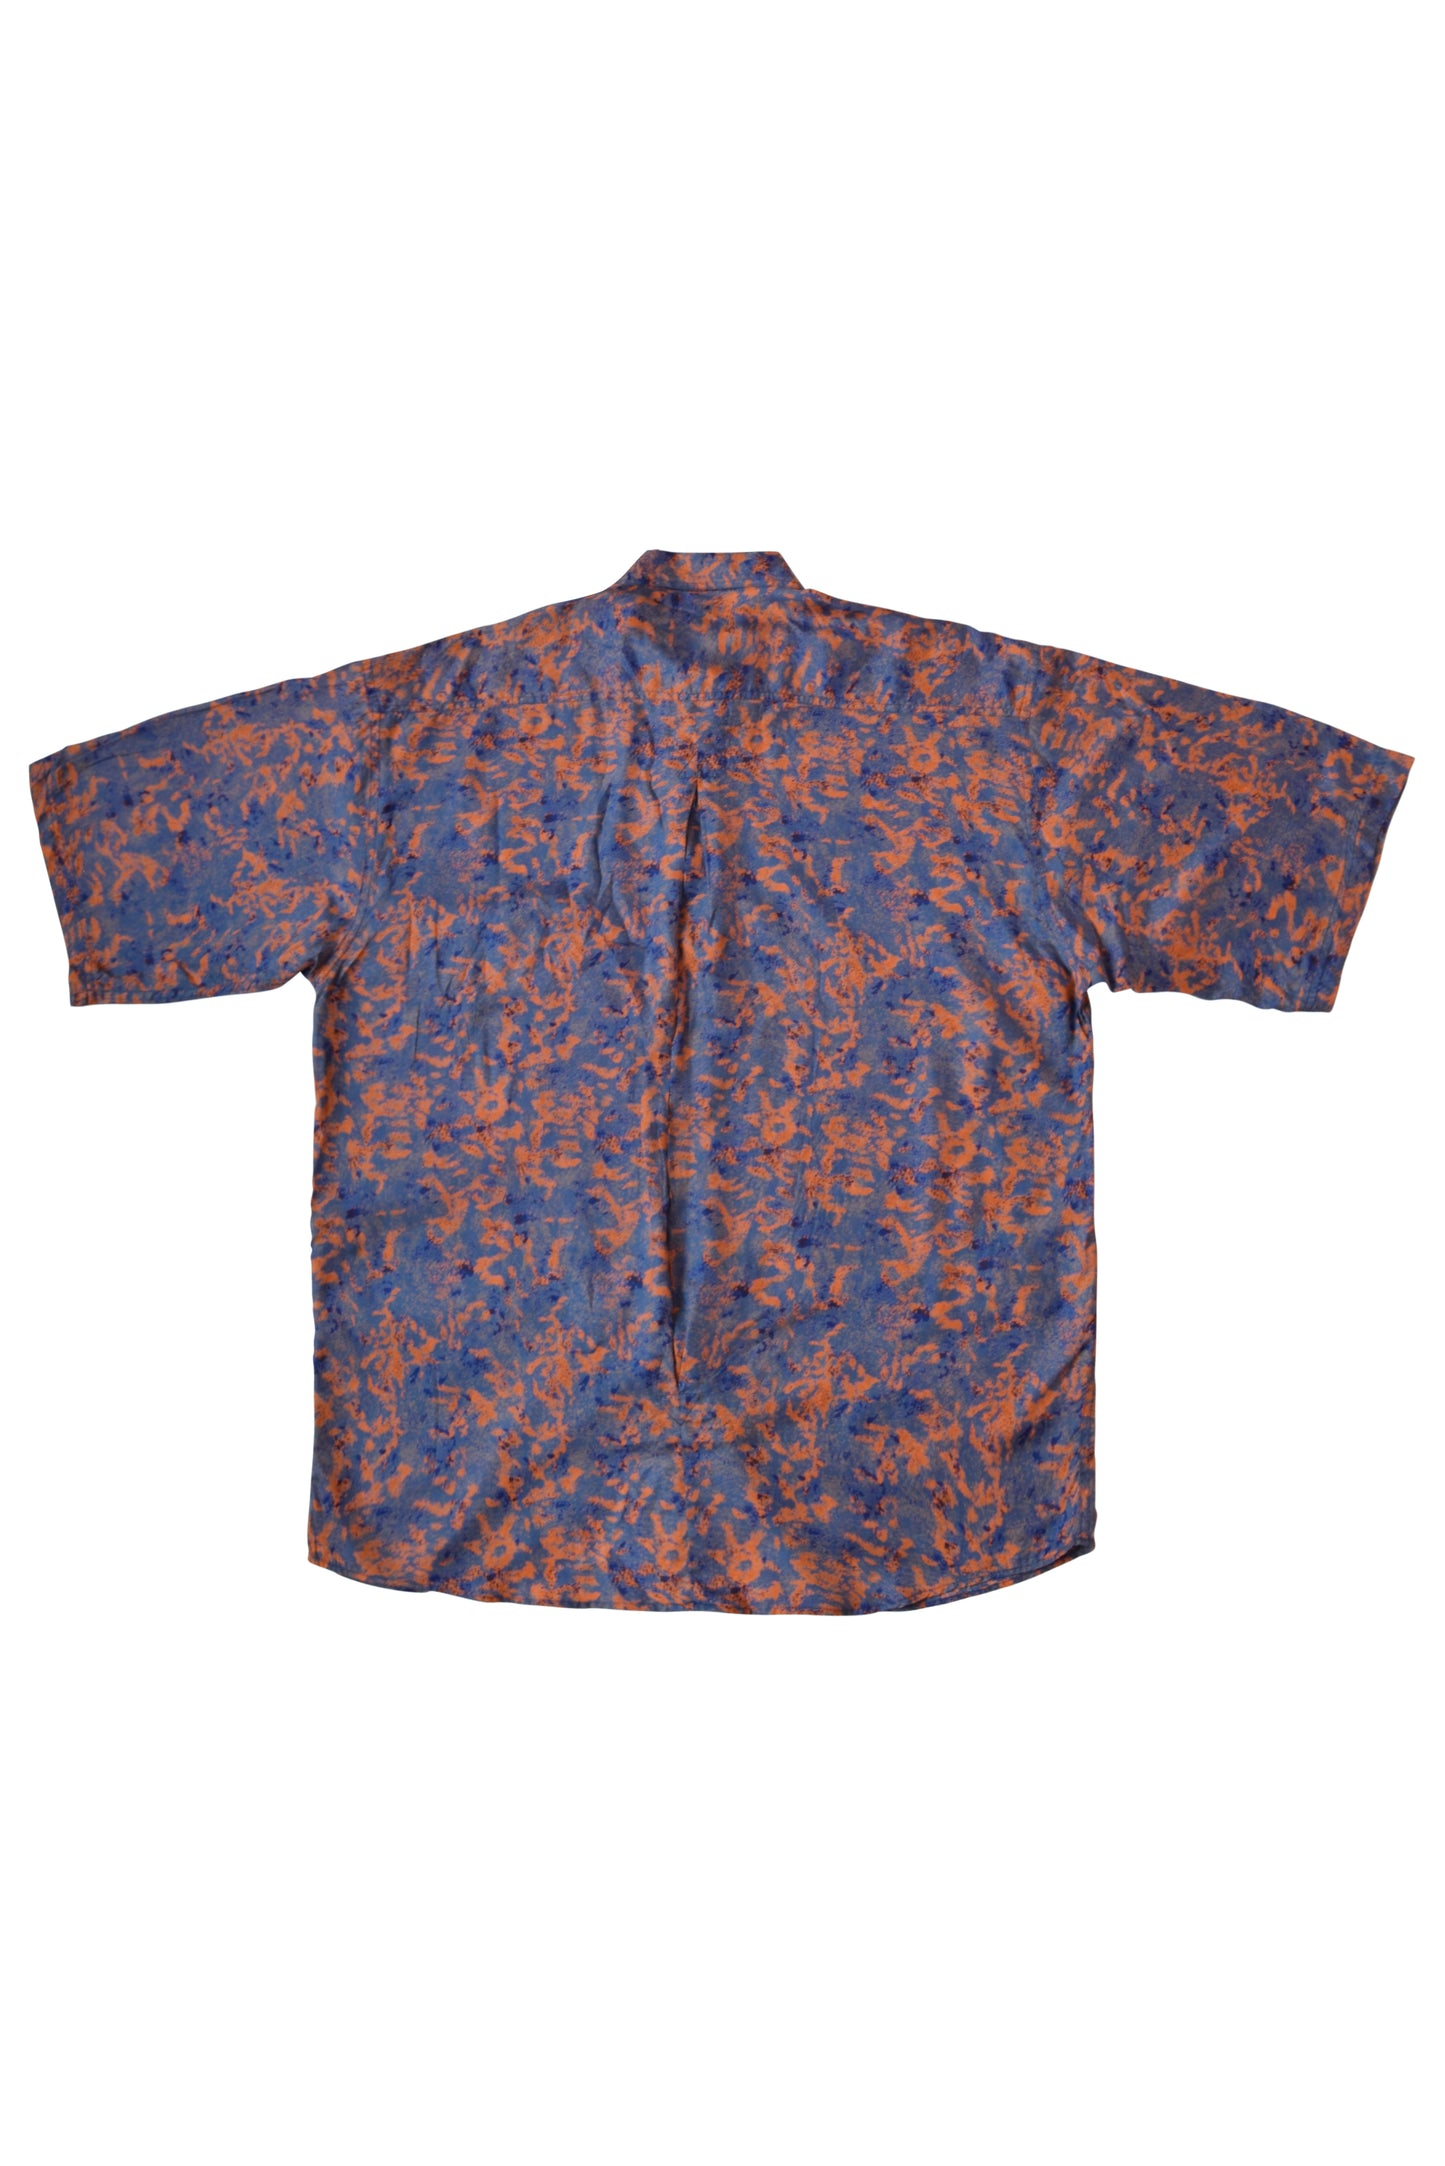 Vintage Silk Festival Shirt 90's Crazy Pattern Size XL